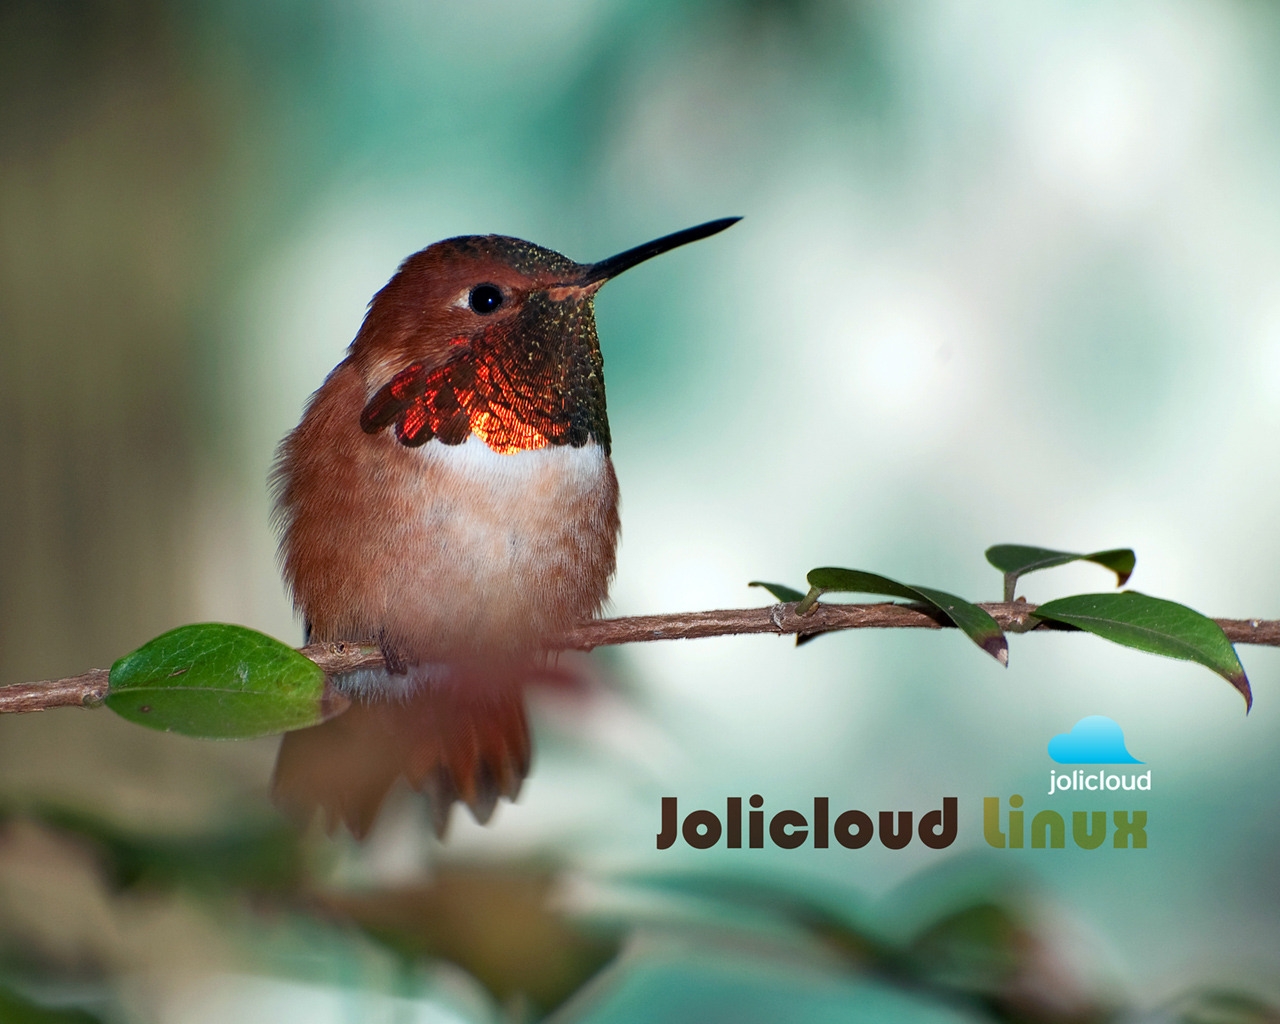 Jolicloud Linux Hummingbird for 1280 x 1024 resolution